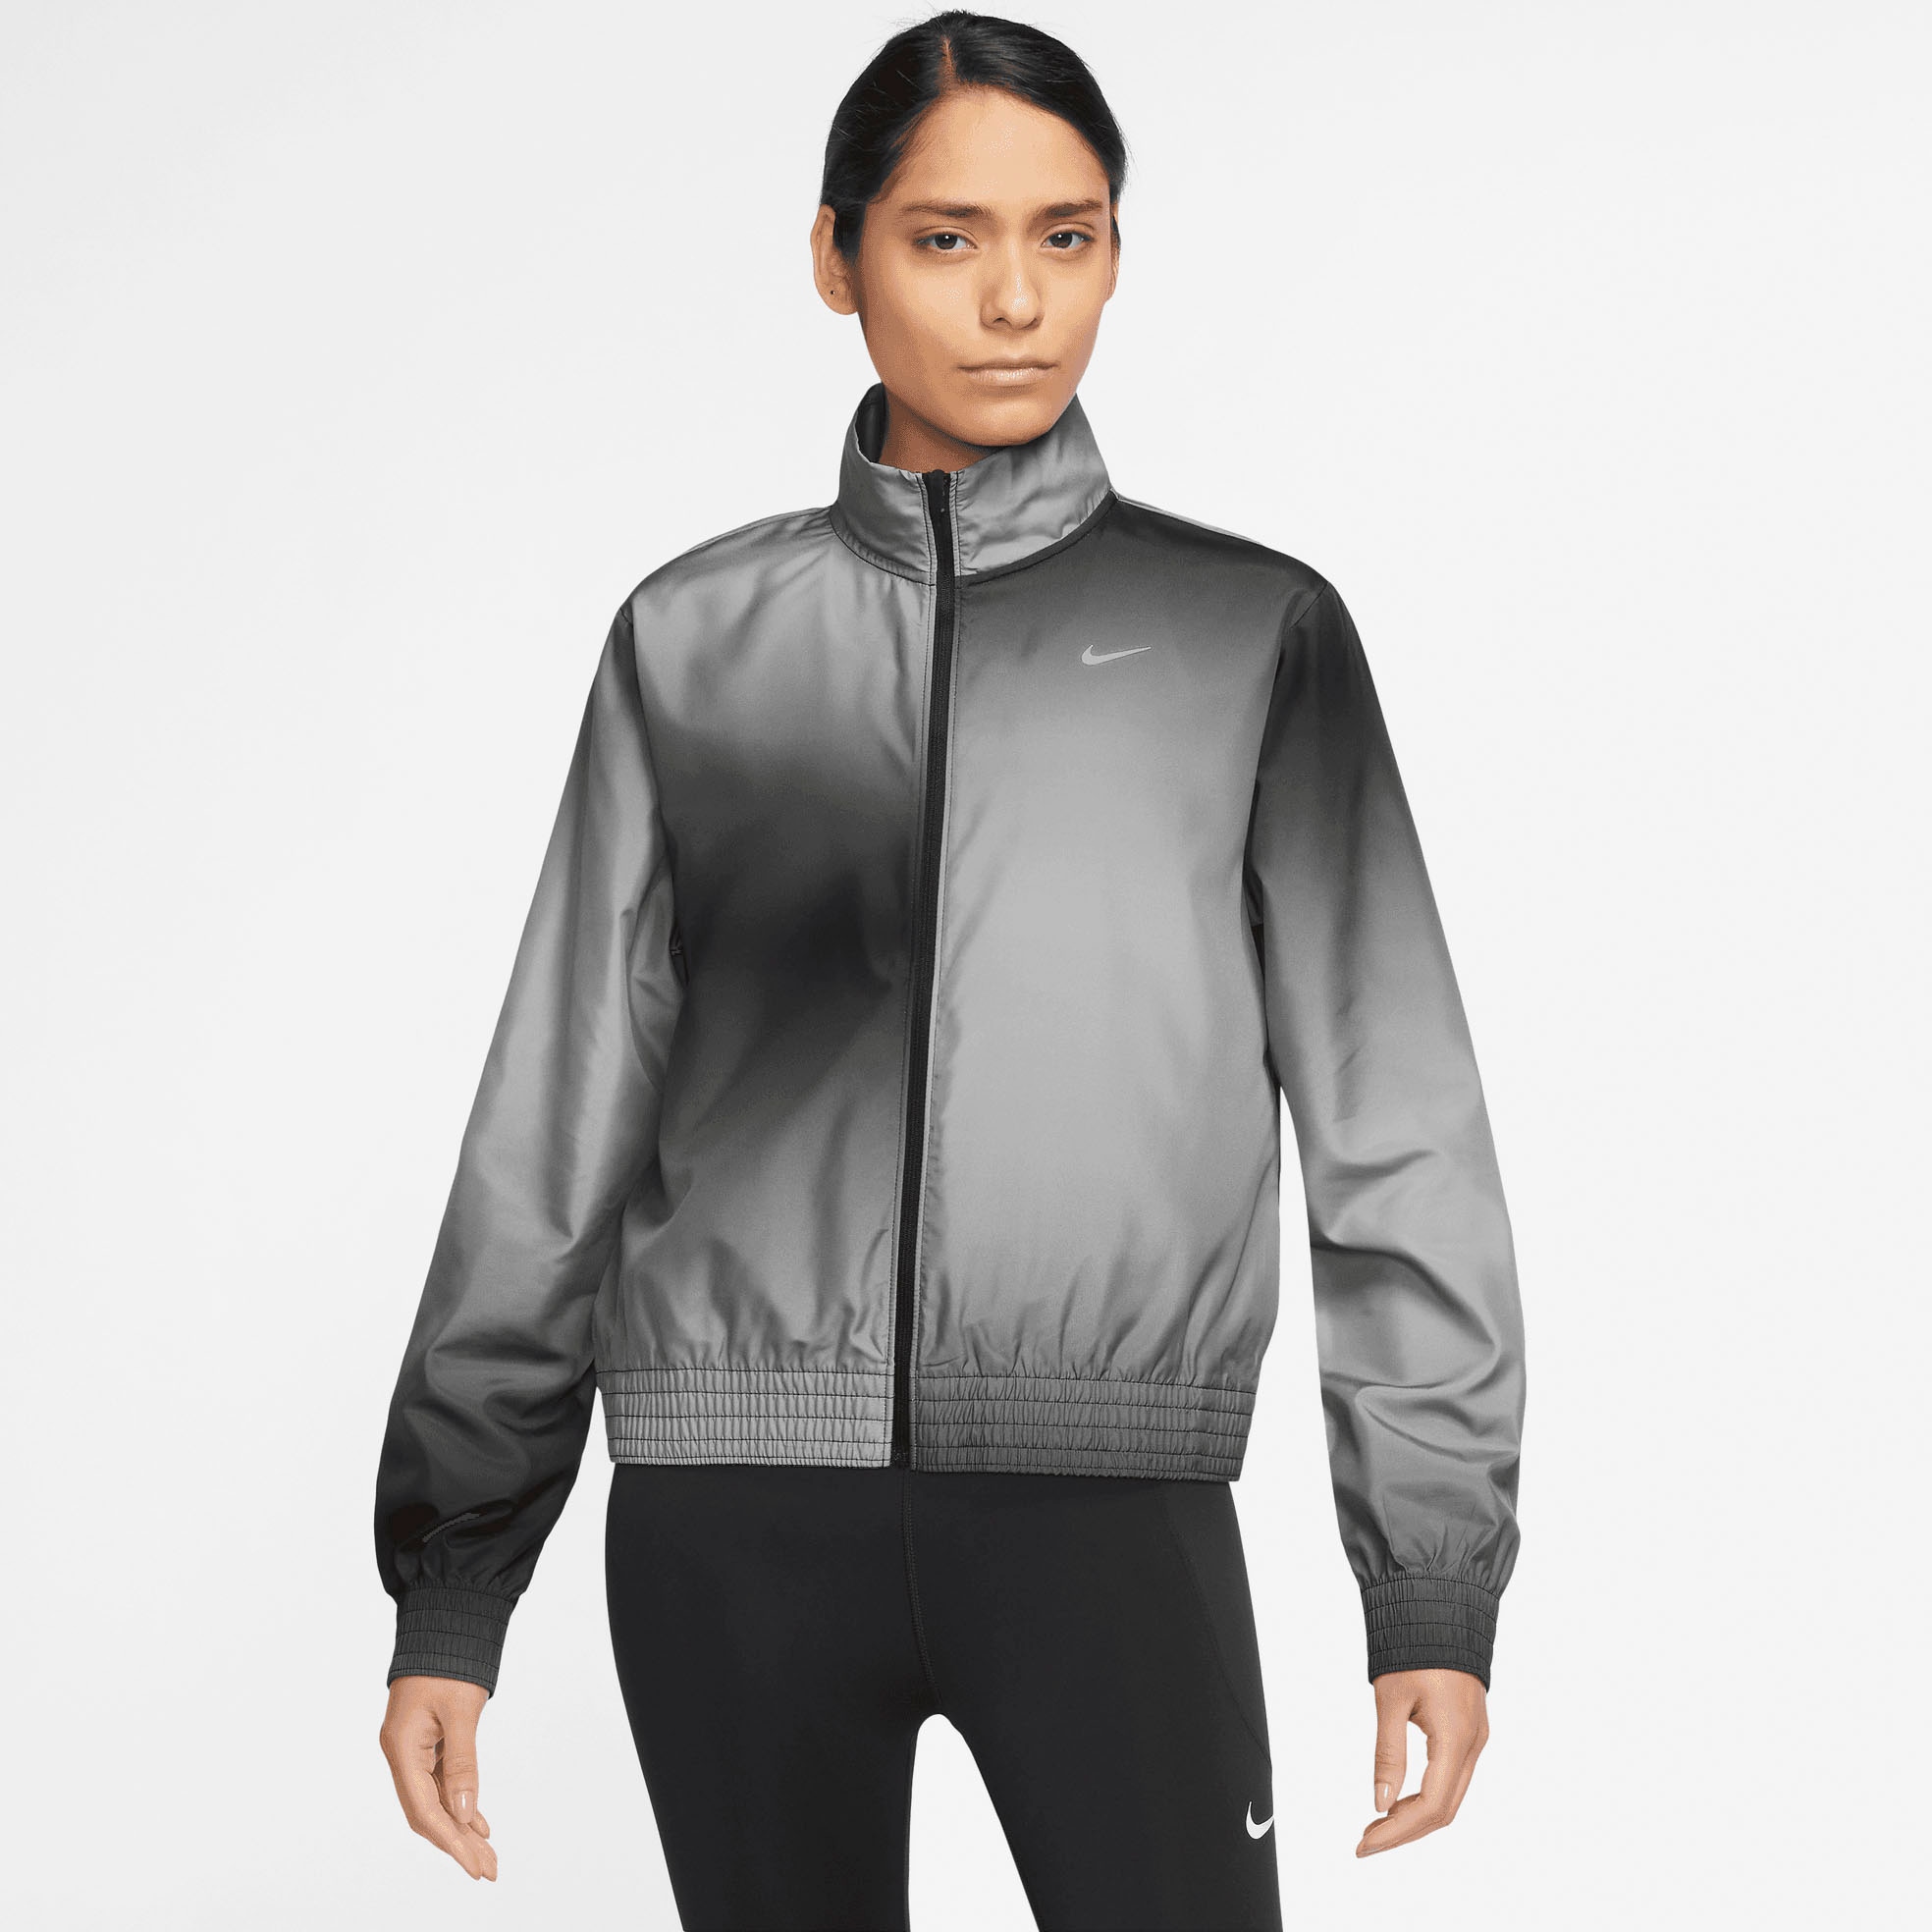 Entdecke Nike Laufjacke »Dri-FIT Jacket« Women\'s Printed Running Swoosh auf Run